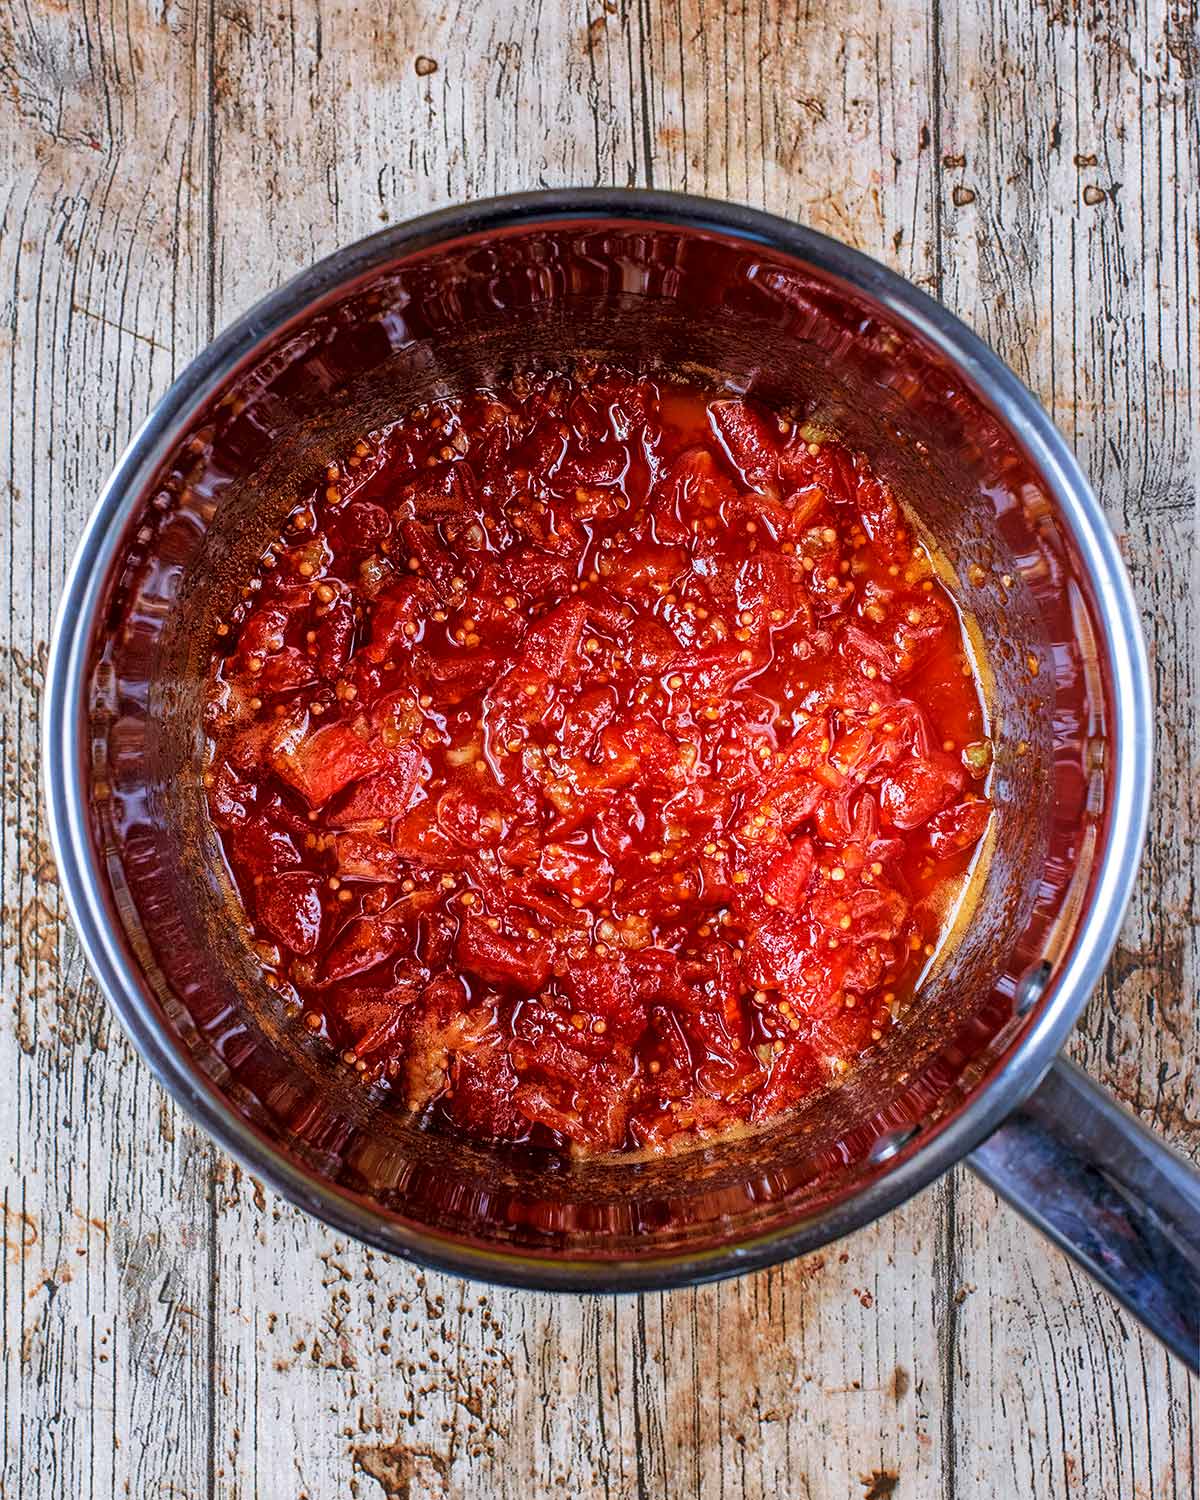 A saucepan containing cooked jam.